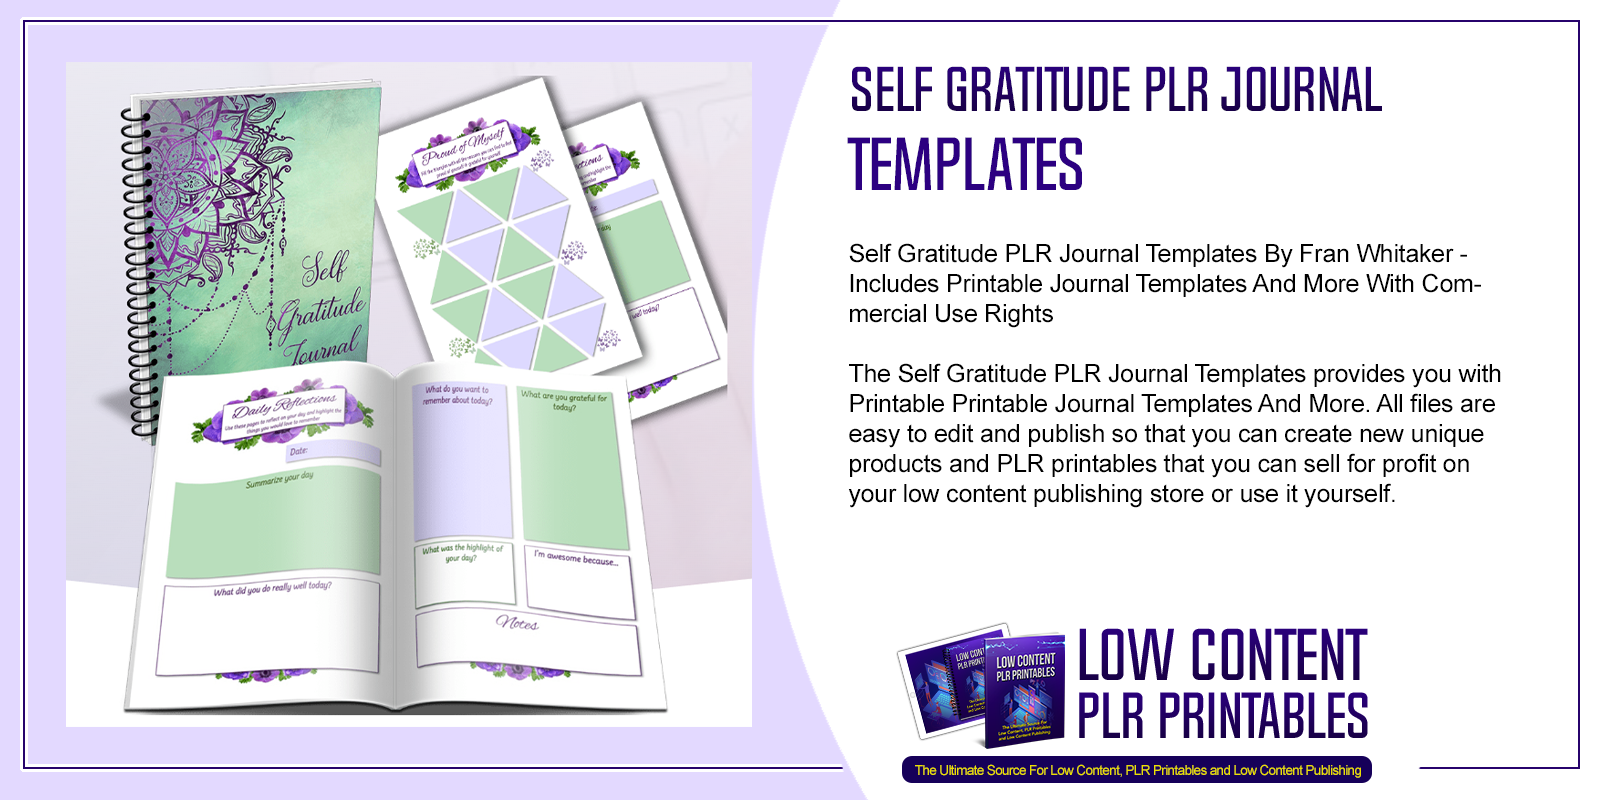 Self Gratitude PLR Journal Templates